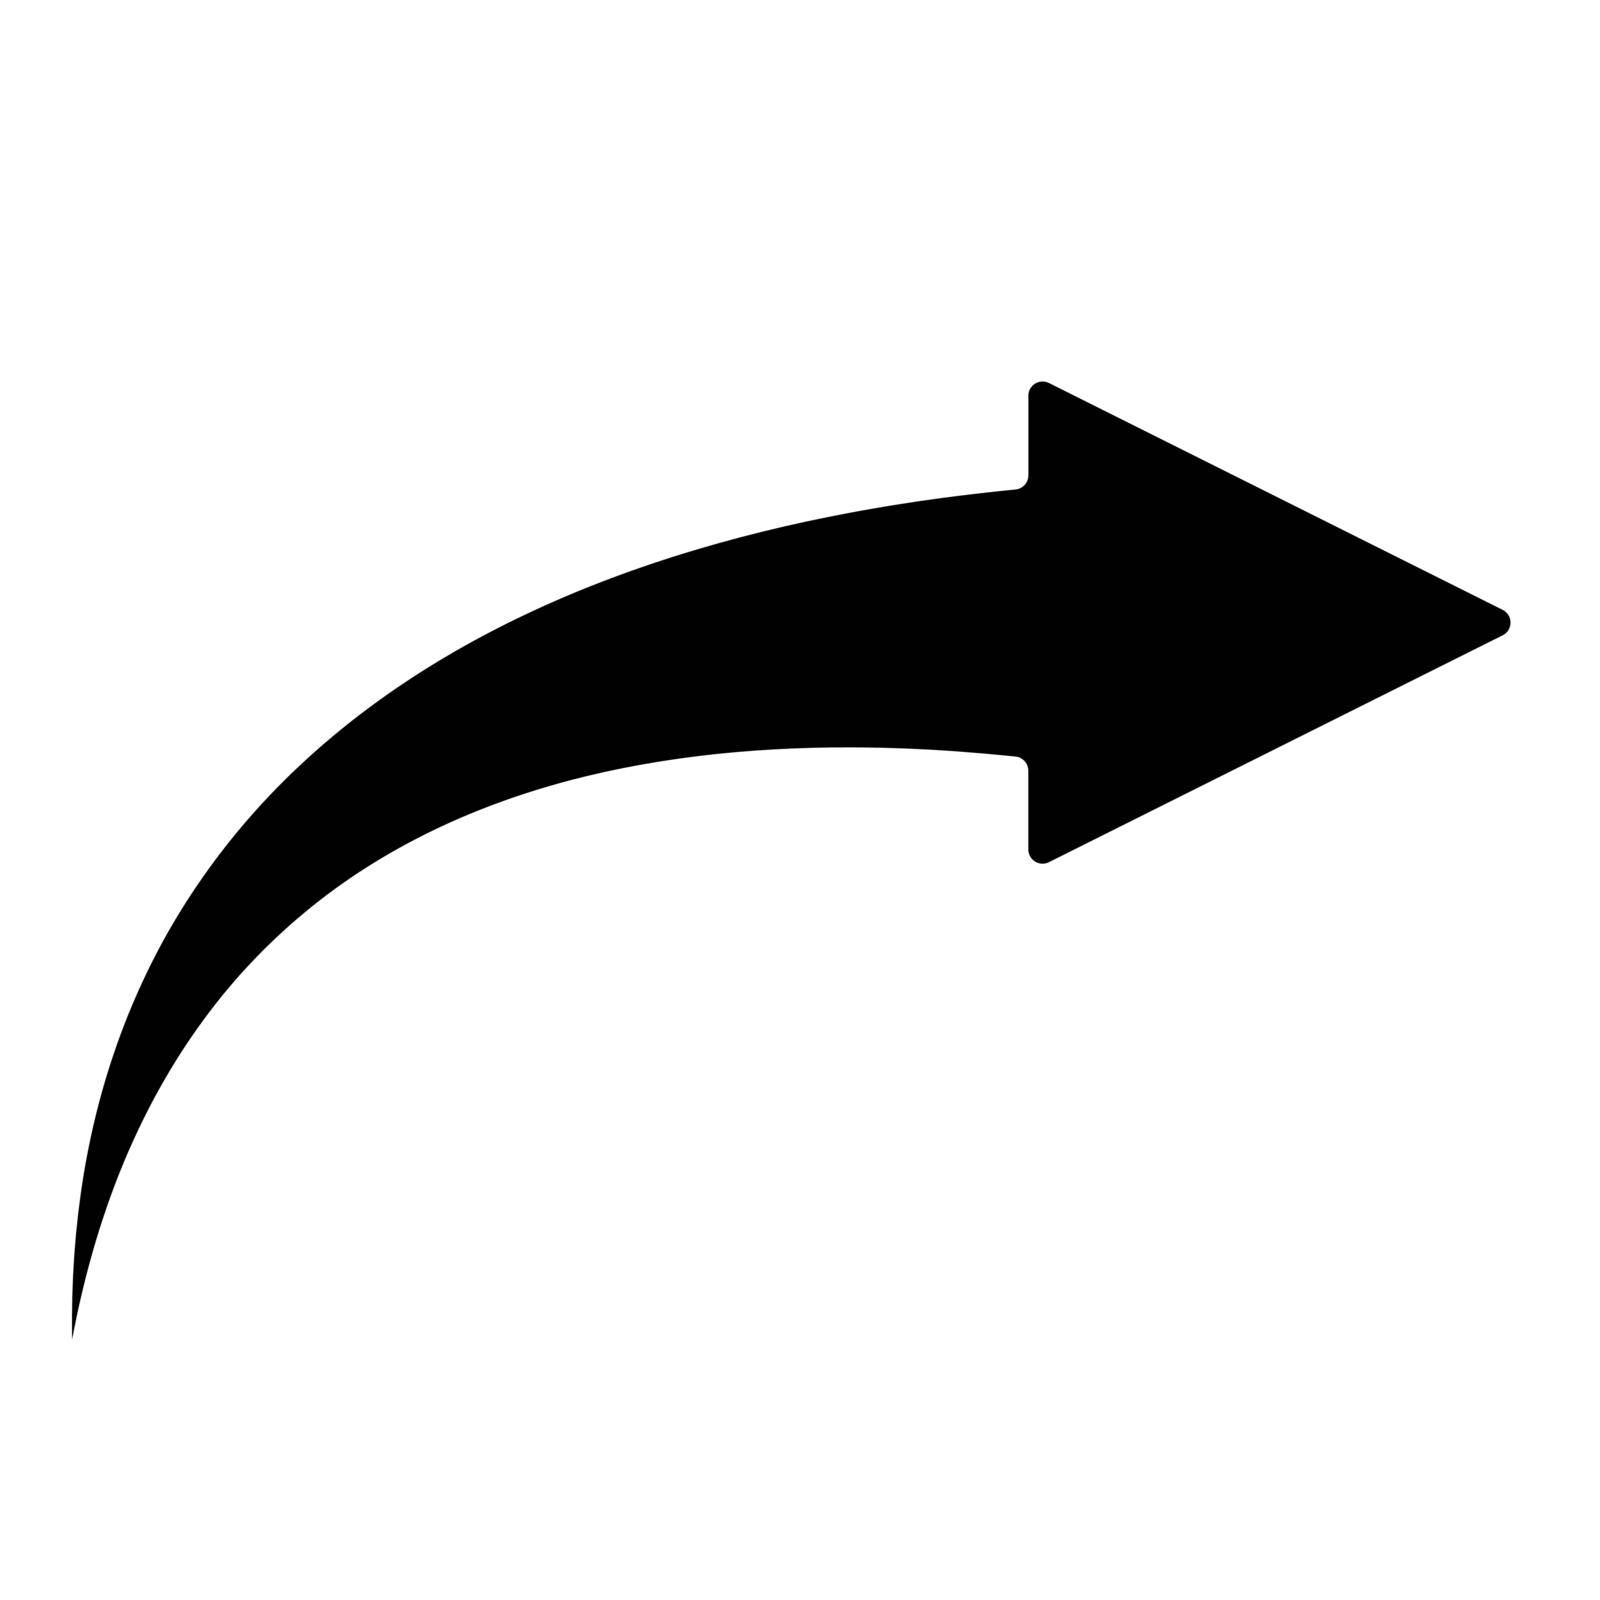 Move forward arrow button icon stock illustration by koksikoks